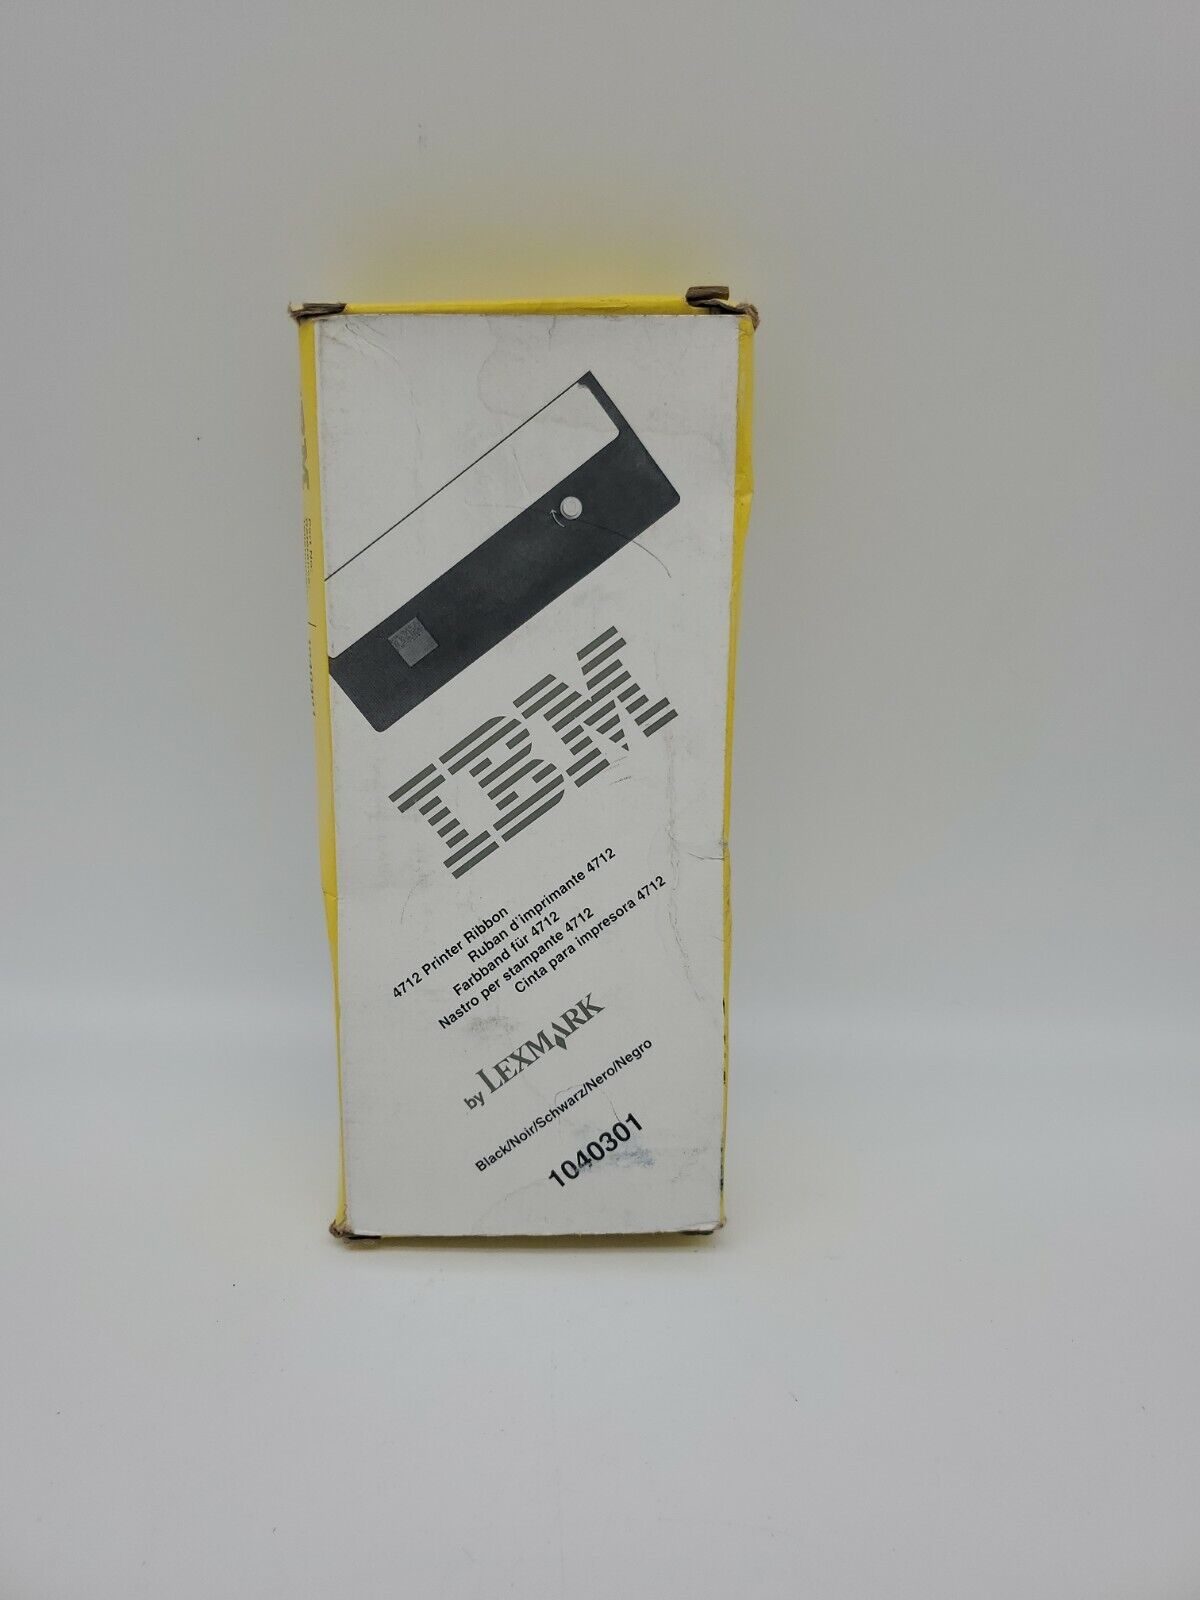 GENUINE NEW IBM Black Printer Ribbon PART # 1040301 -...44